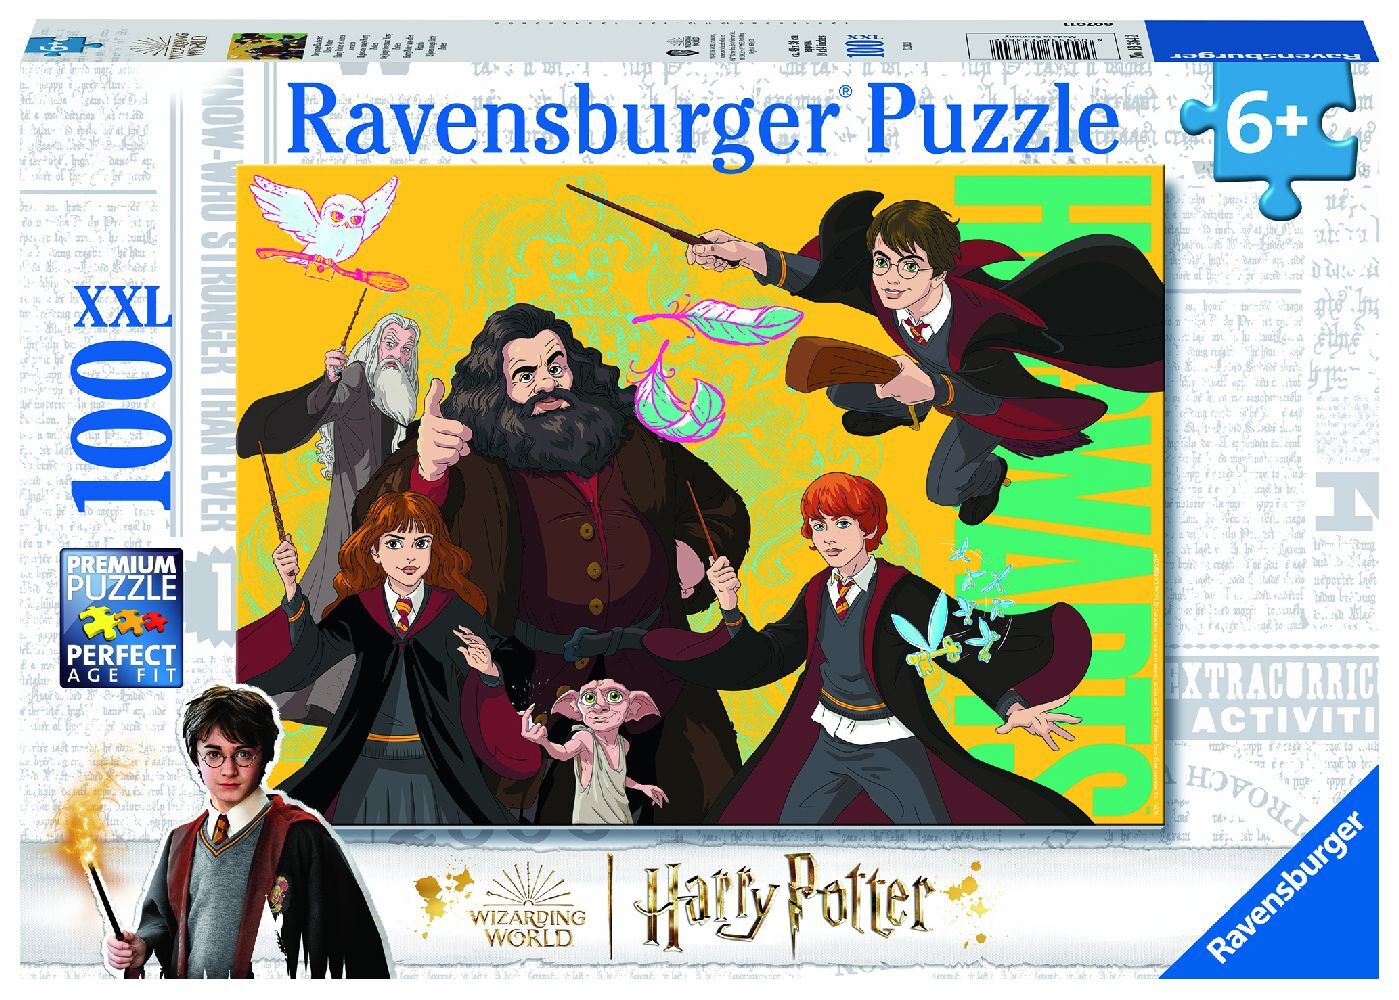 Ravensburger Kinderpuzzle 13364 - Der junge Zauberer Harry Potter - 100 Teile XXL Harry Potter Puzzle für Kinder ab 6 Jahren